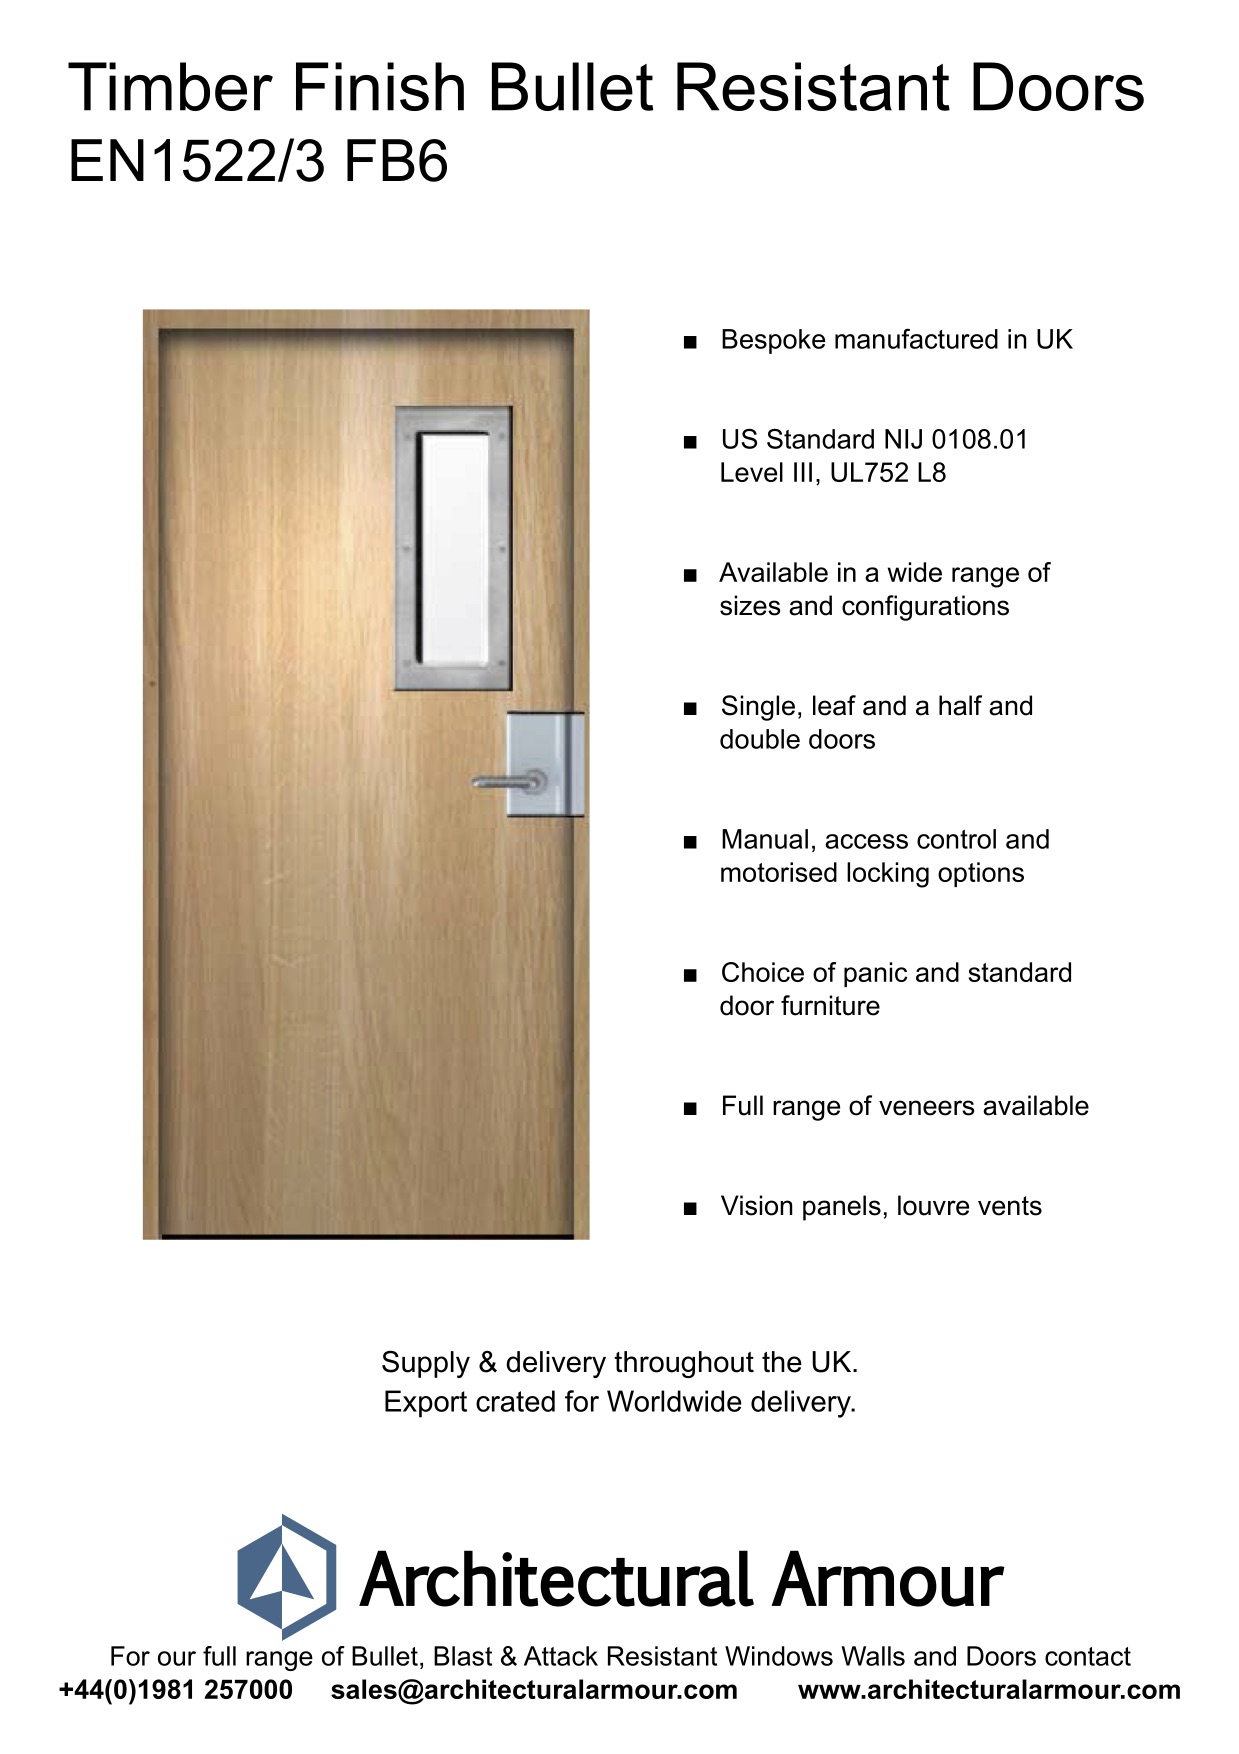 EN1522-3-FB6-Single-Slim-Vision-Panel-Bullet-Resistant-Timber-Finish-Door